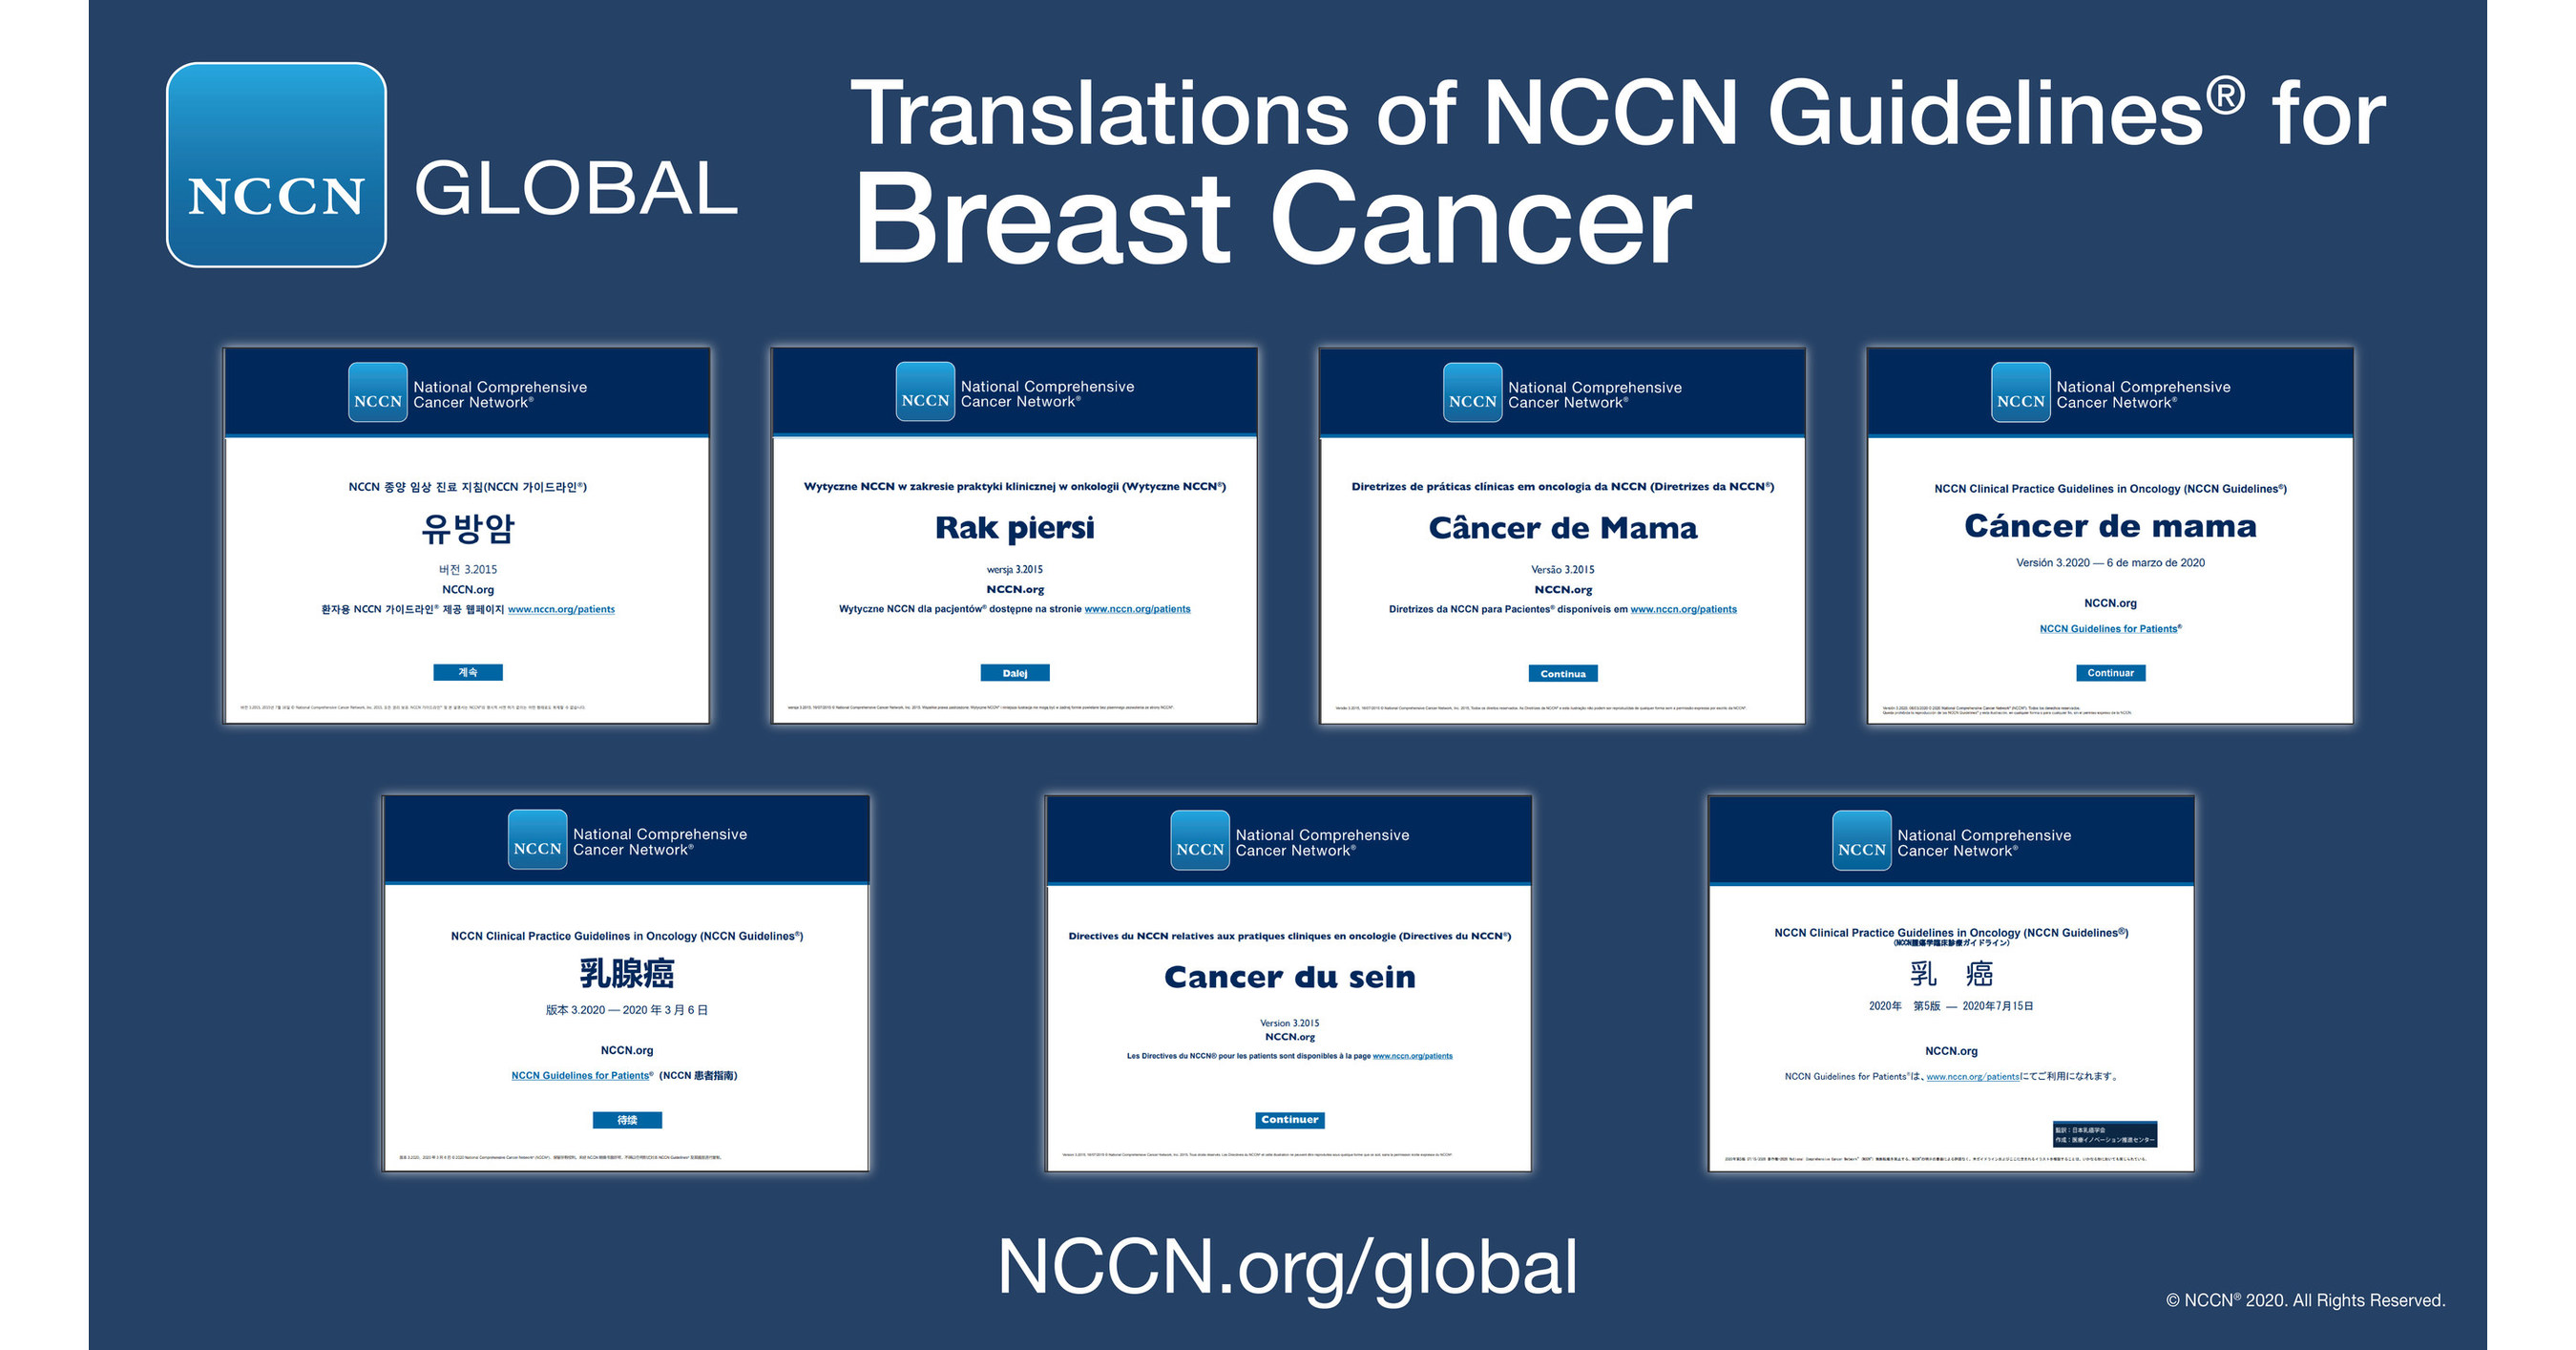 Expert Breast Cancer Treatment Based on Latest Evidence